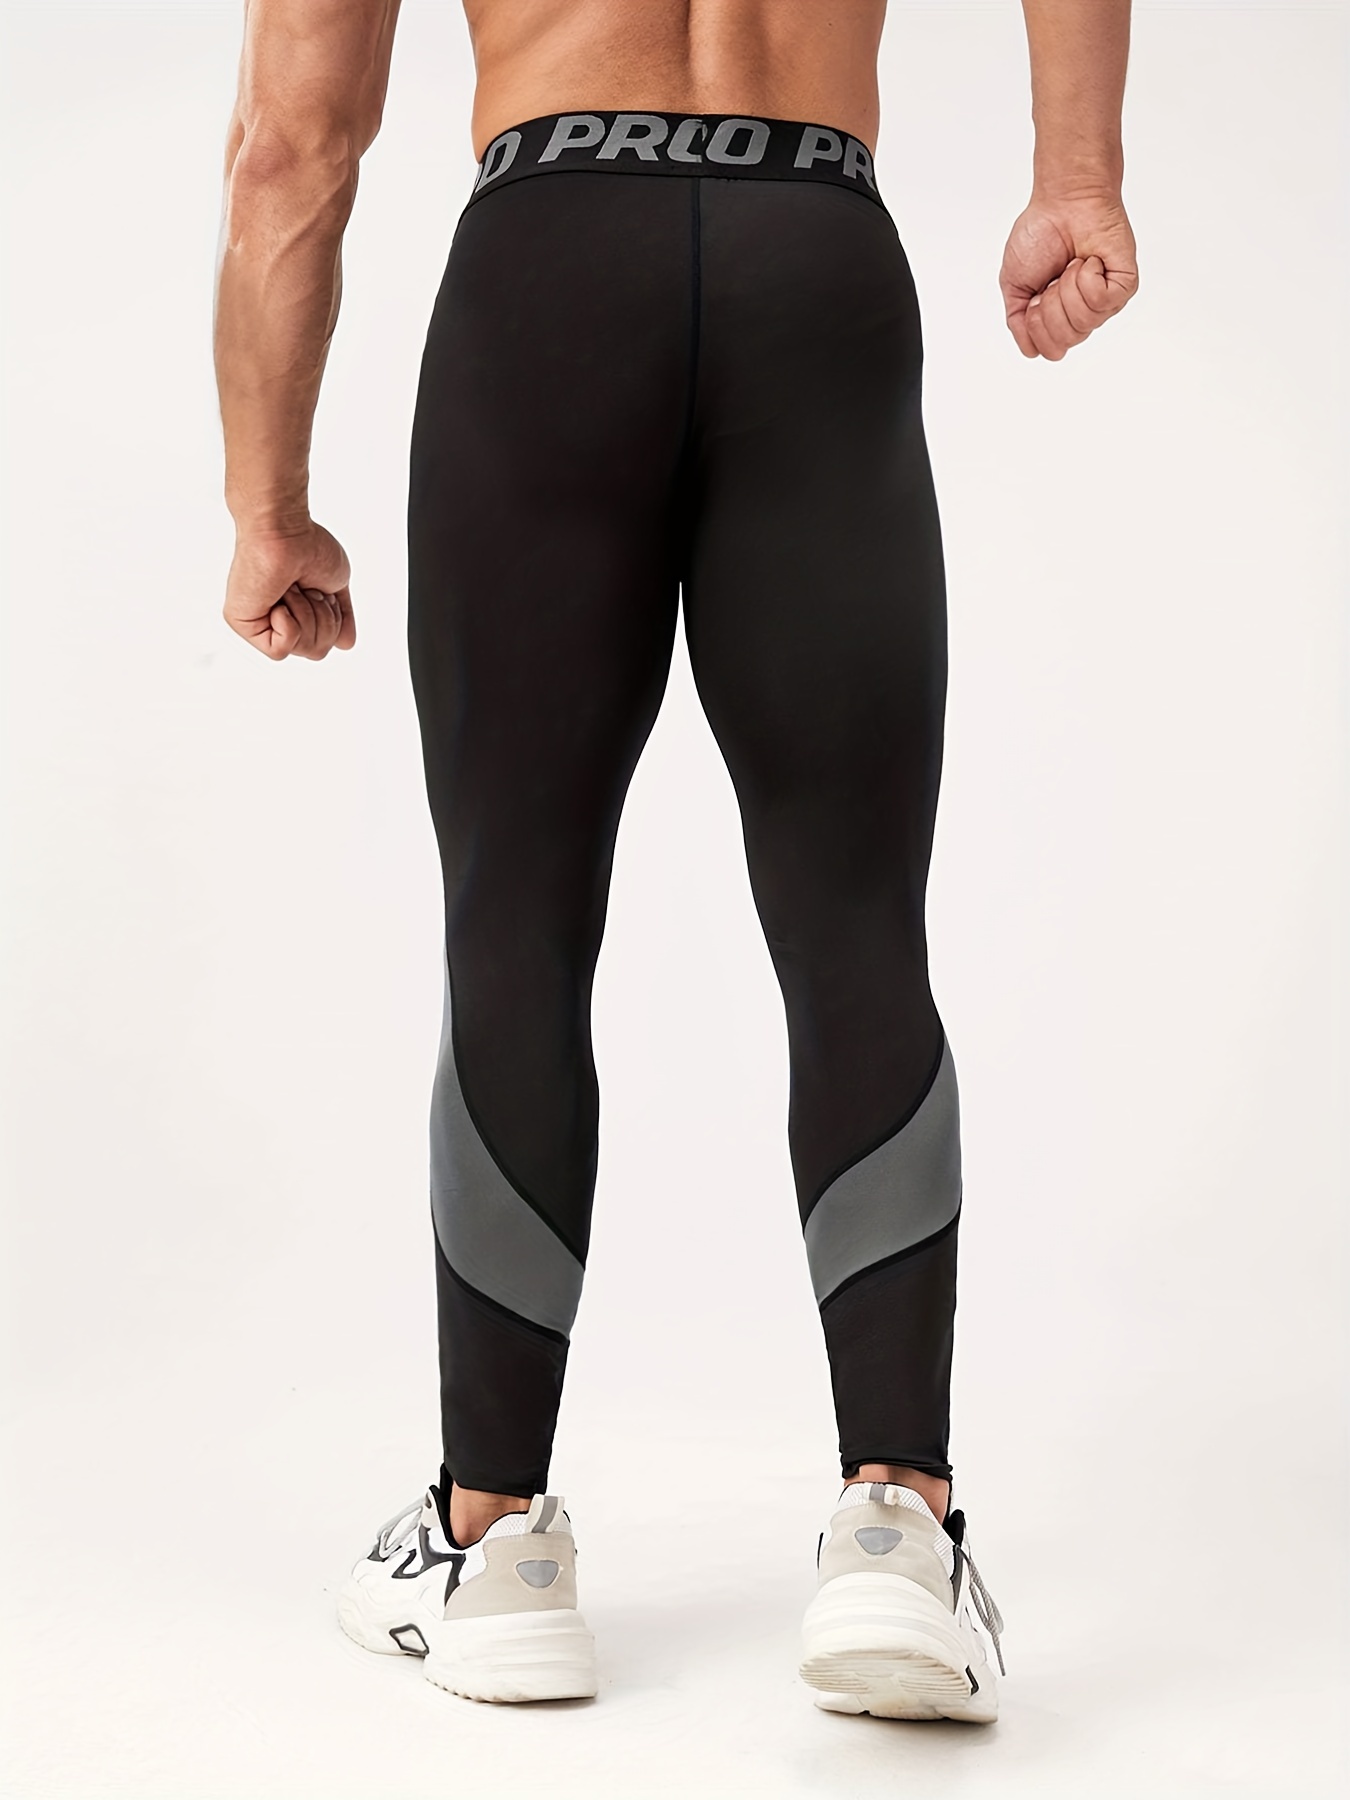 ZAREUS Men's Compression Pants Running Tights Athletic Leggings- Dry F